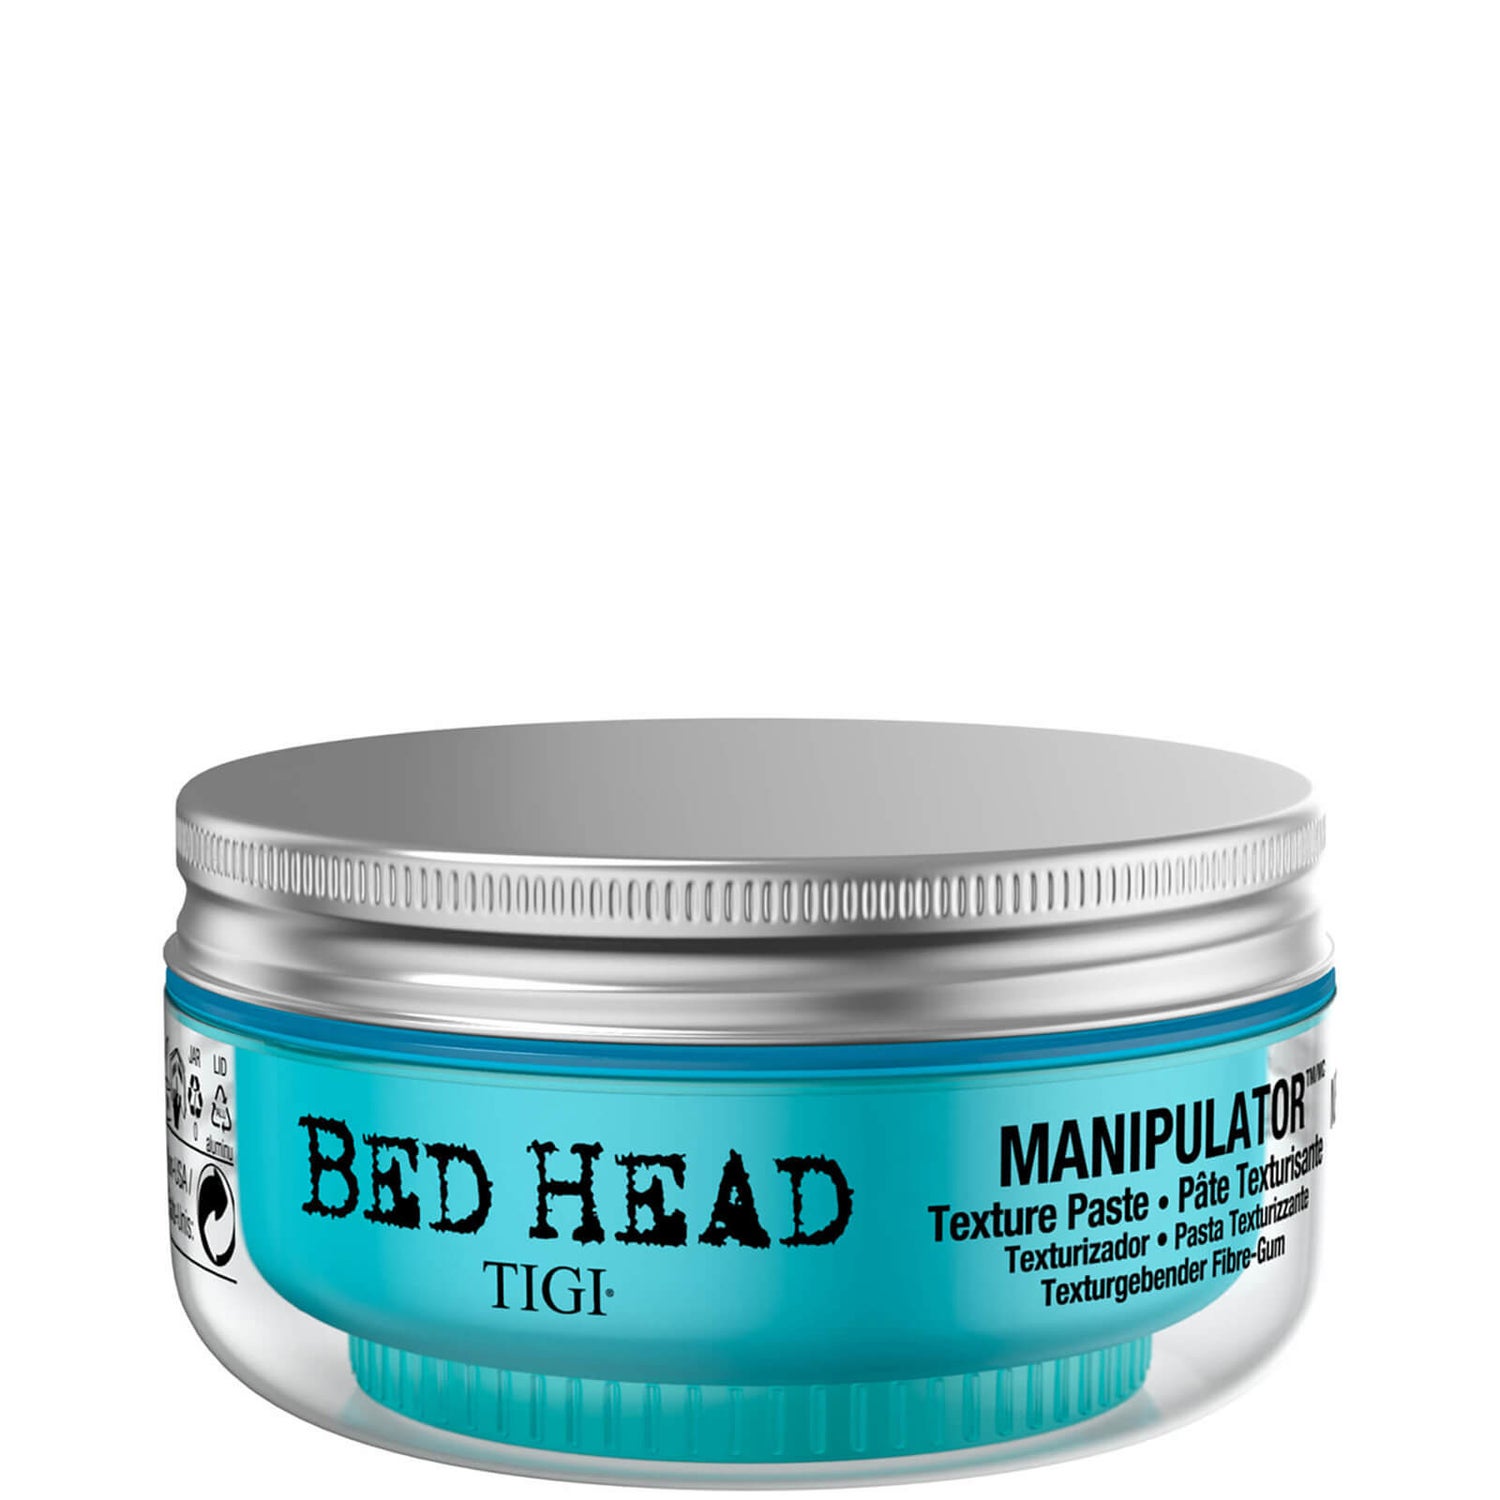 Pasta Bed Head Manipulator Texture da TIGI (57 g)